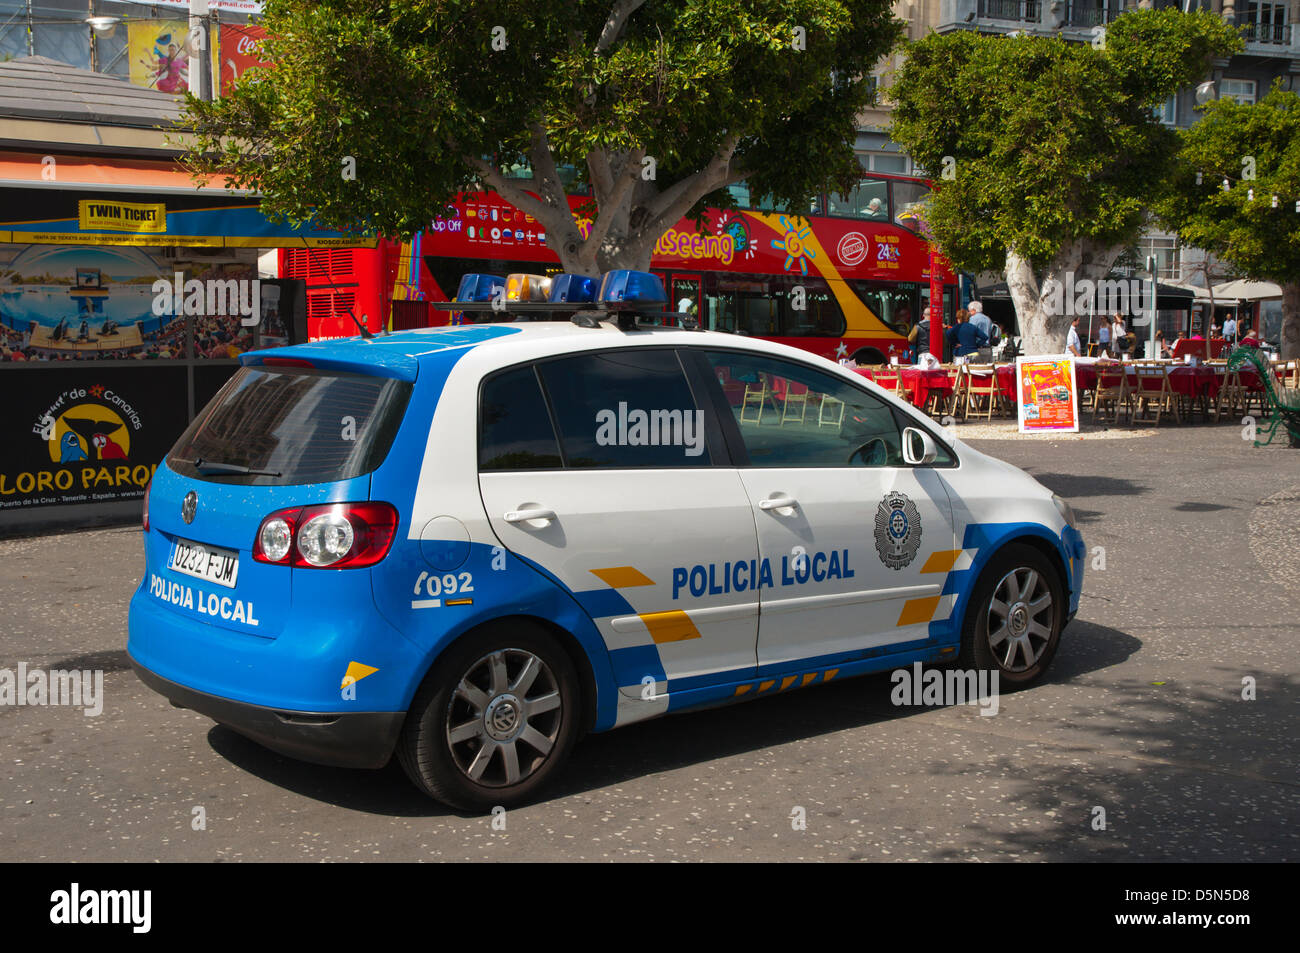 Police car at Plaza de la Candelaria square Santa Cruz de Tenerife city Tenerife island the Canary Islands Spain Europe Stock Photo